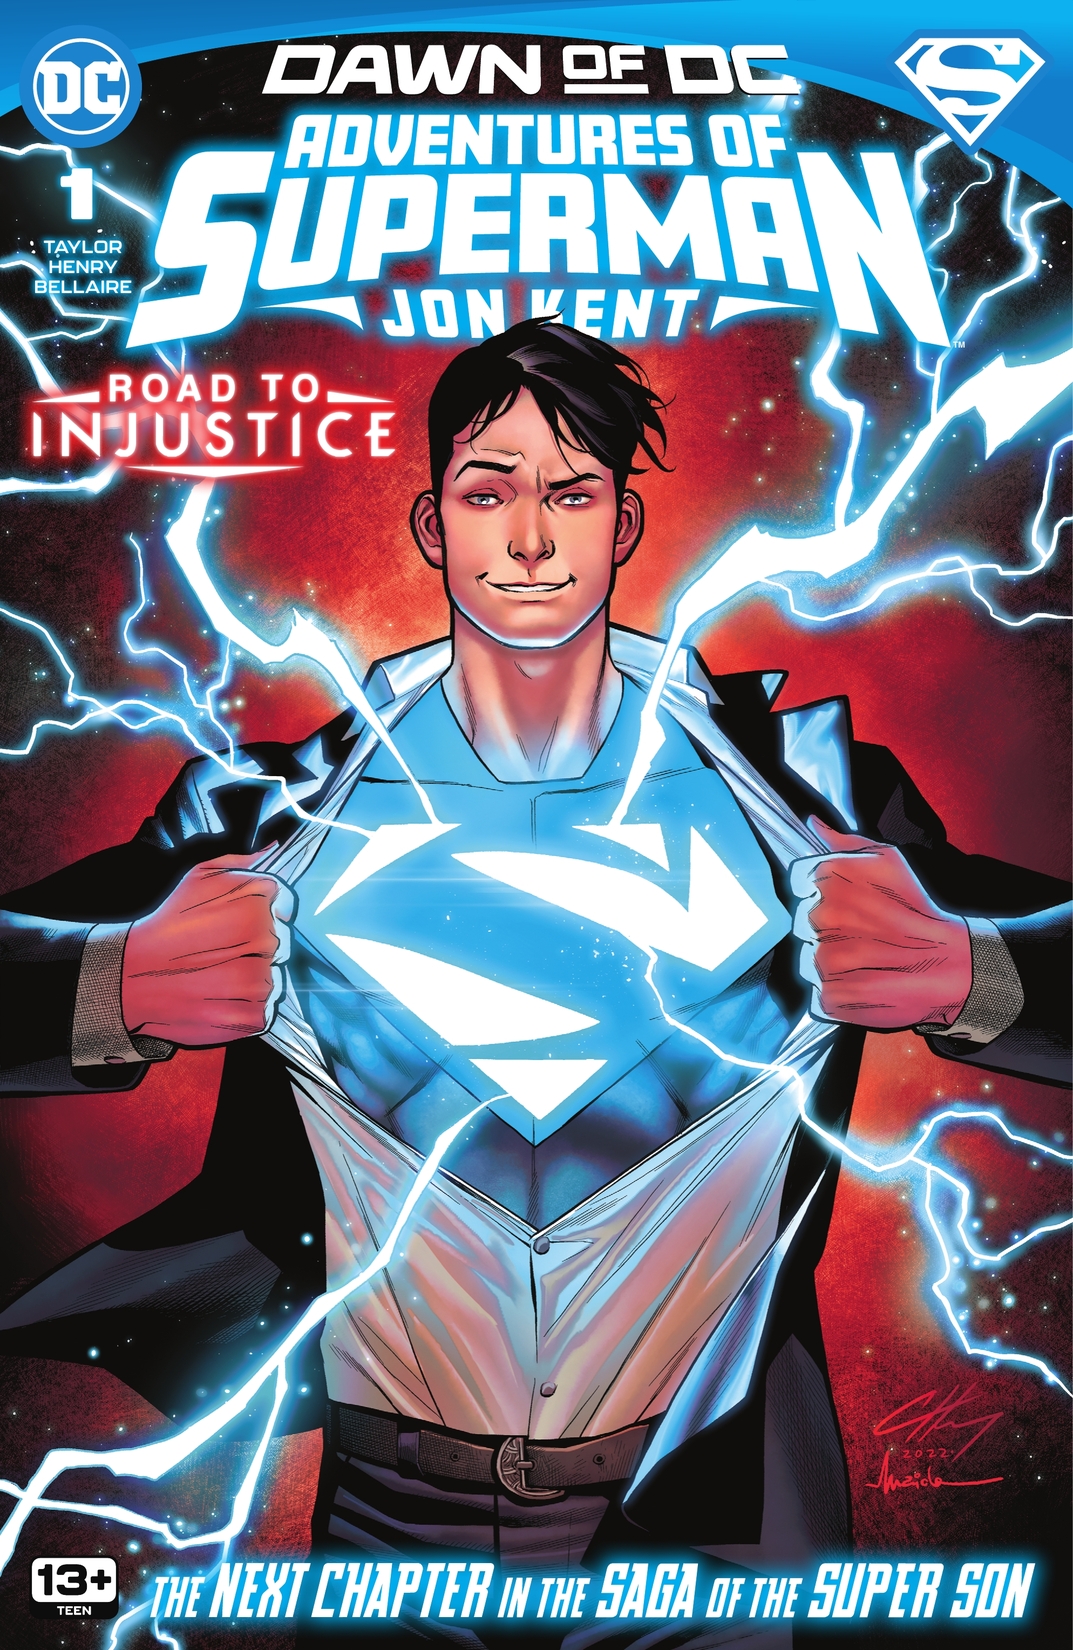 Adventures of Superman: Jon Kent #1 preview images